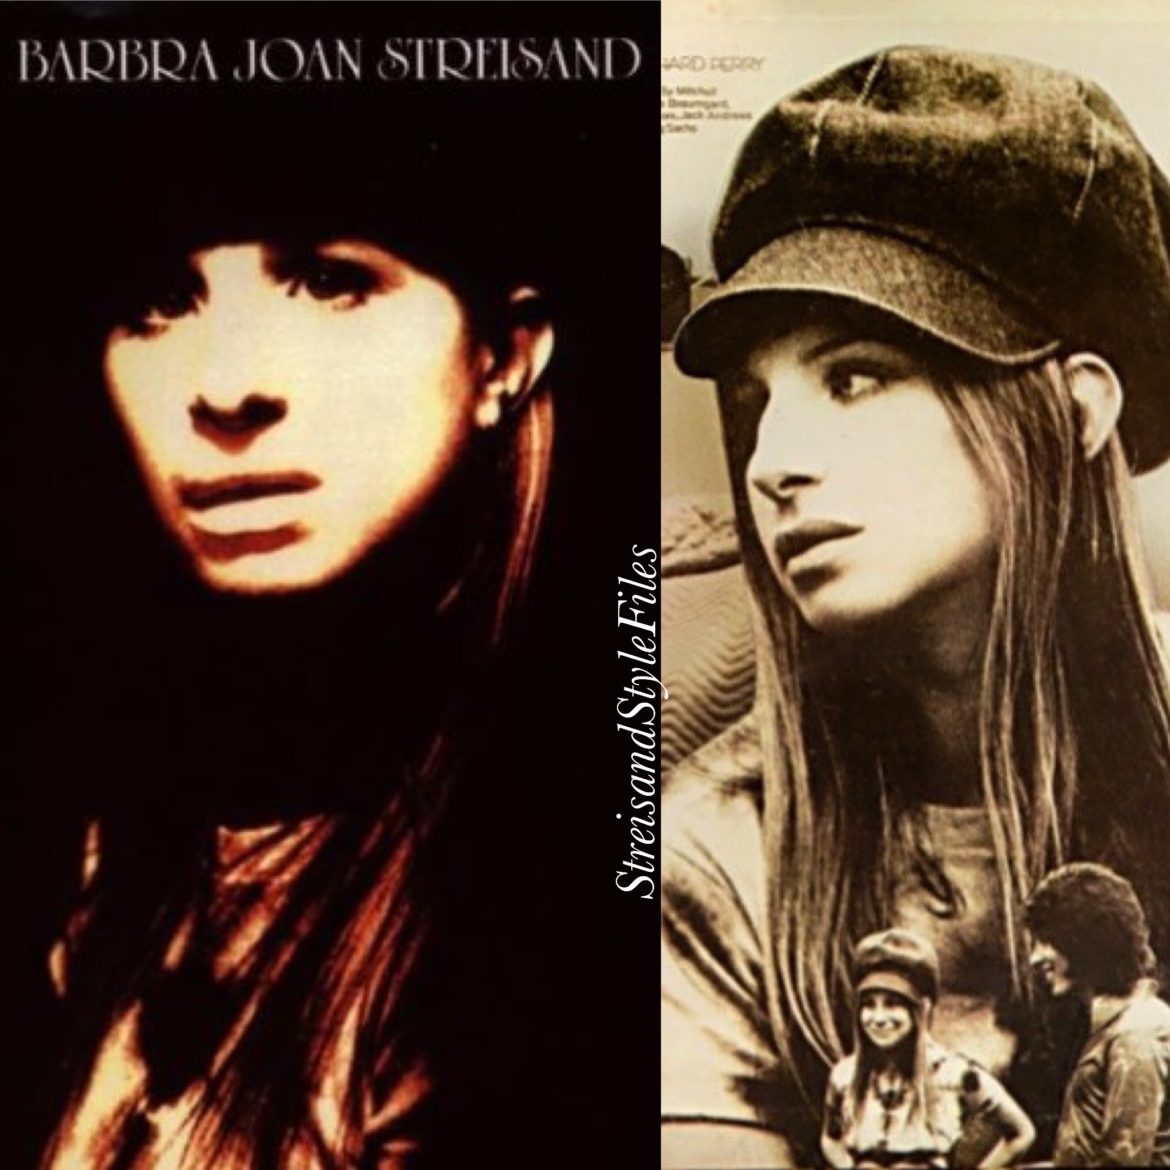 Newsboy caps, tie-dye and the Barbra Joan Streisand album cover